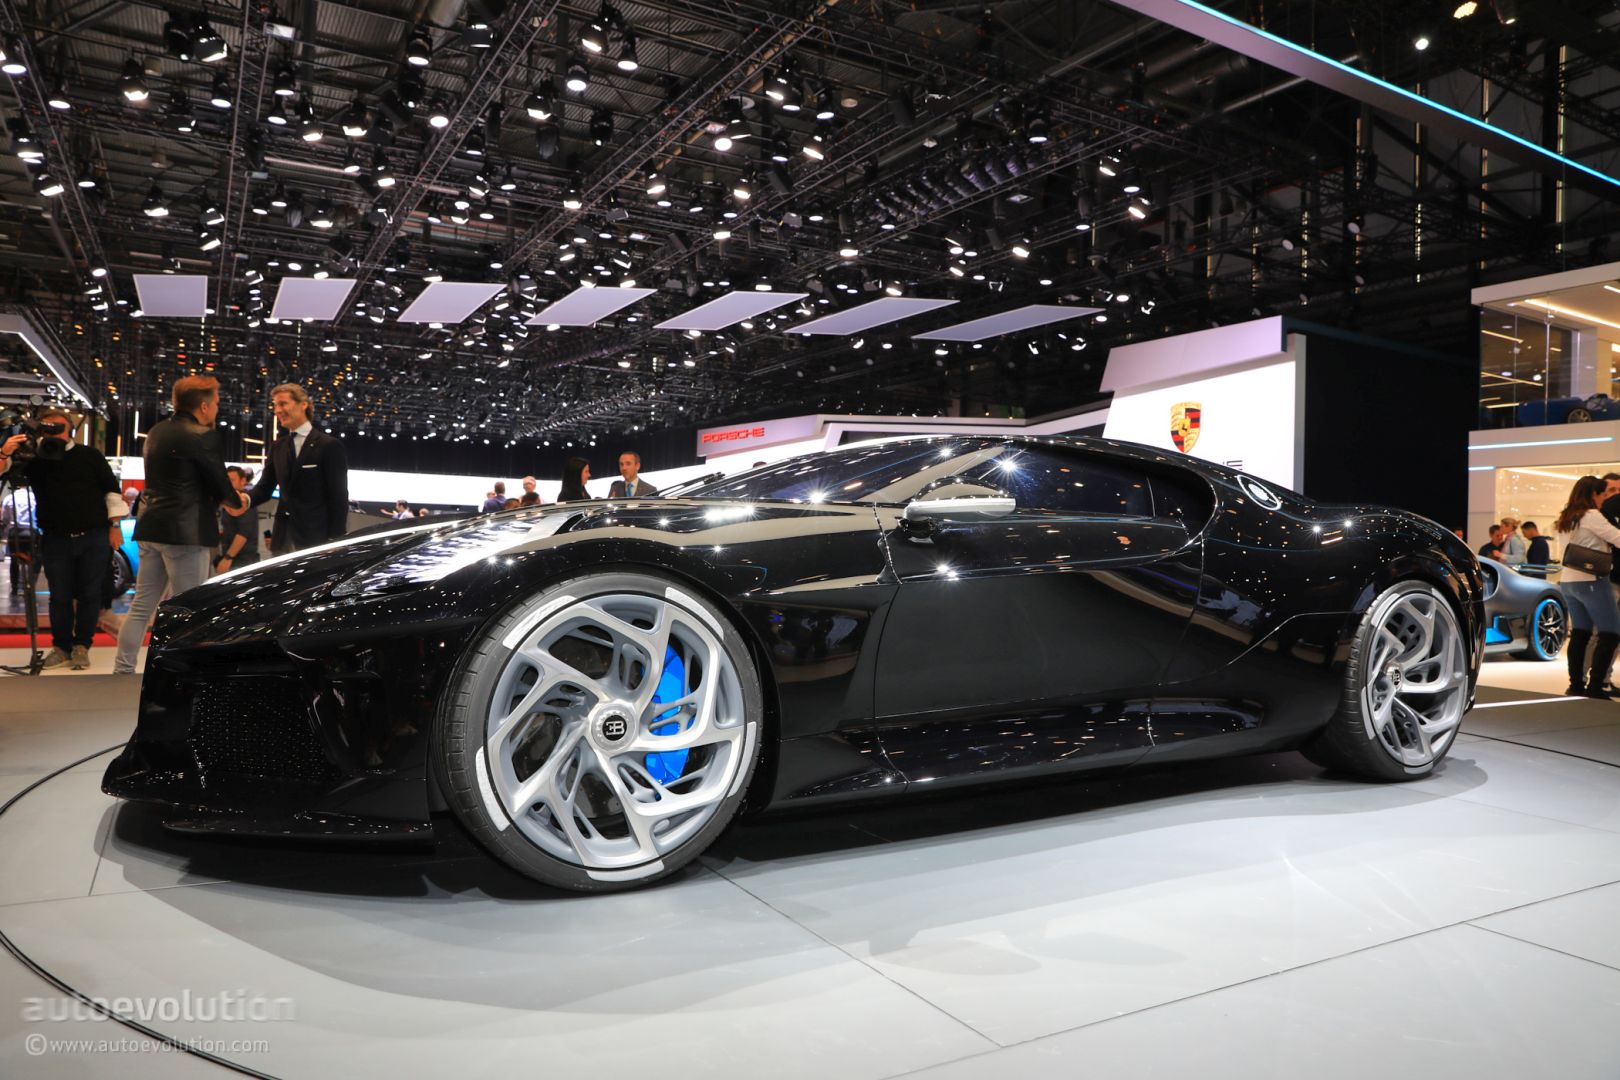 UPDATE 19M Bugatti  La Voiture Noire Geneva Car Is a 